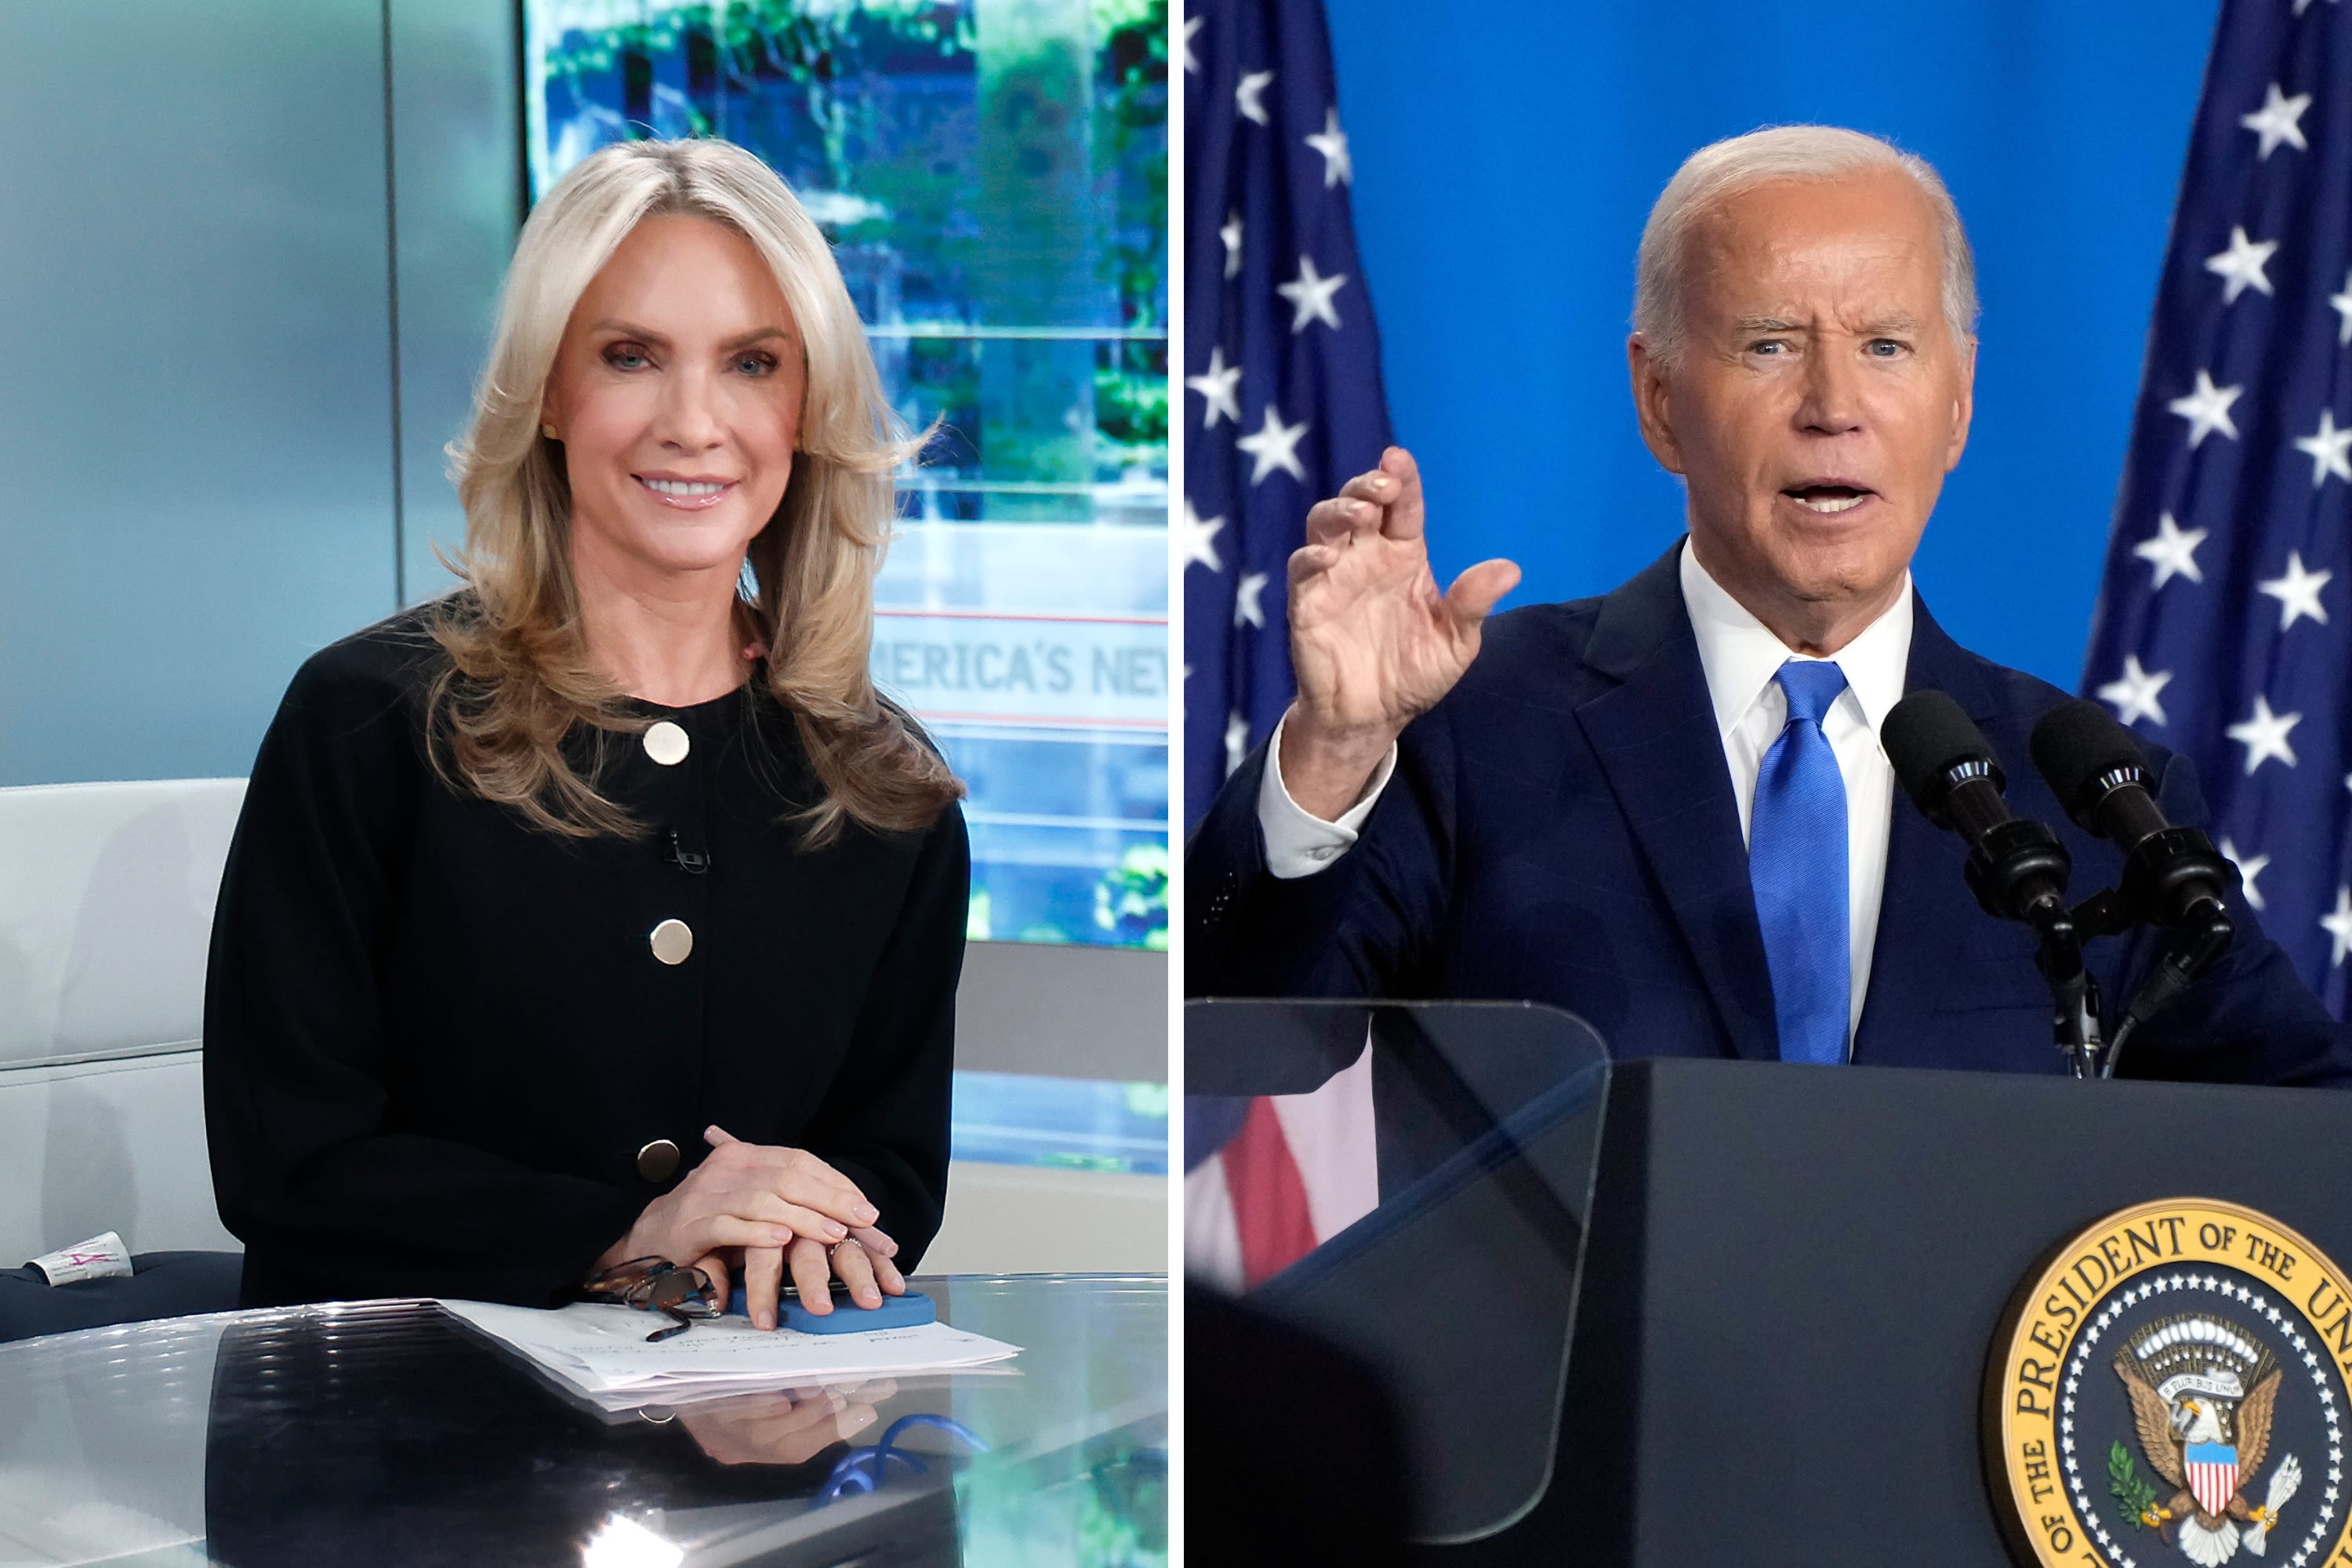 Fox News host muddles own name discussing Joe Biden news conference